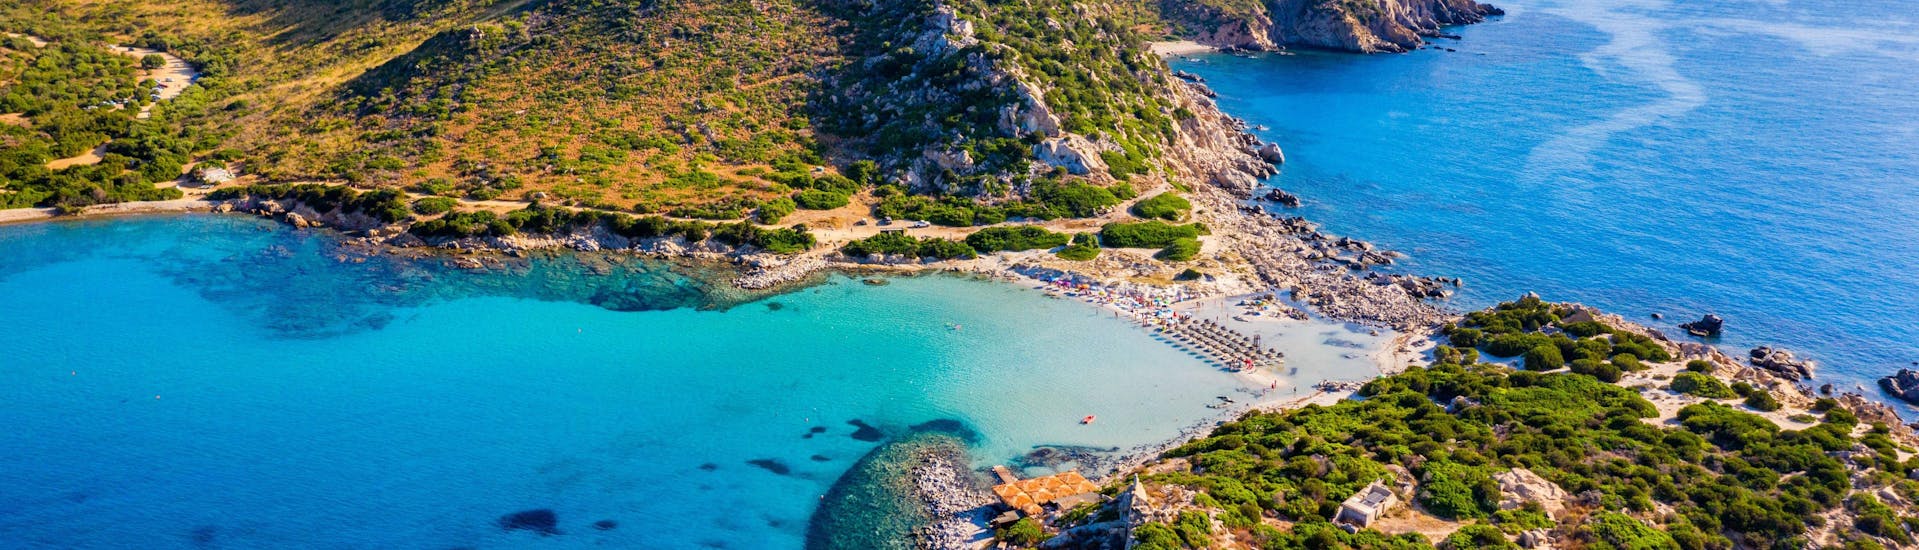 View of Punta Molentis, Sardinia, a popular destination for boat trips.